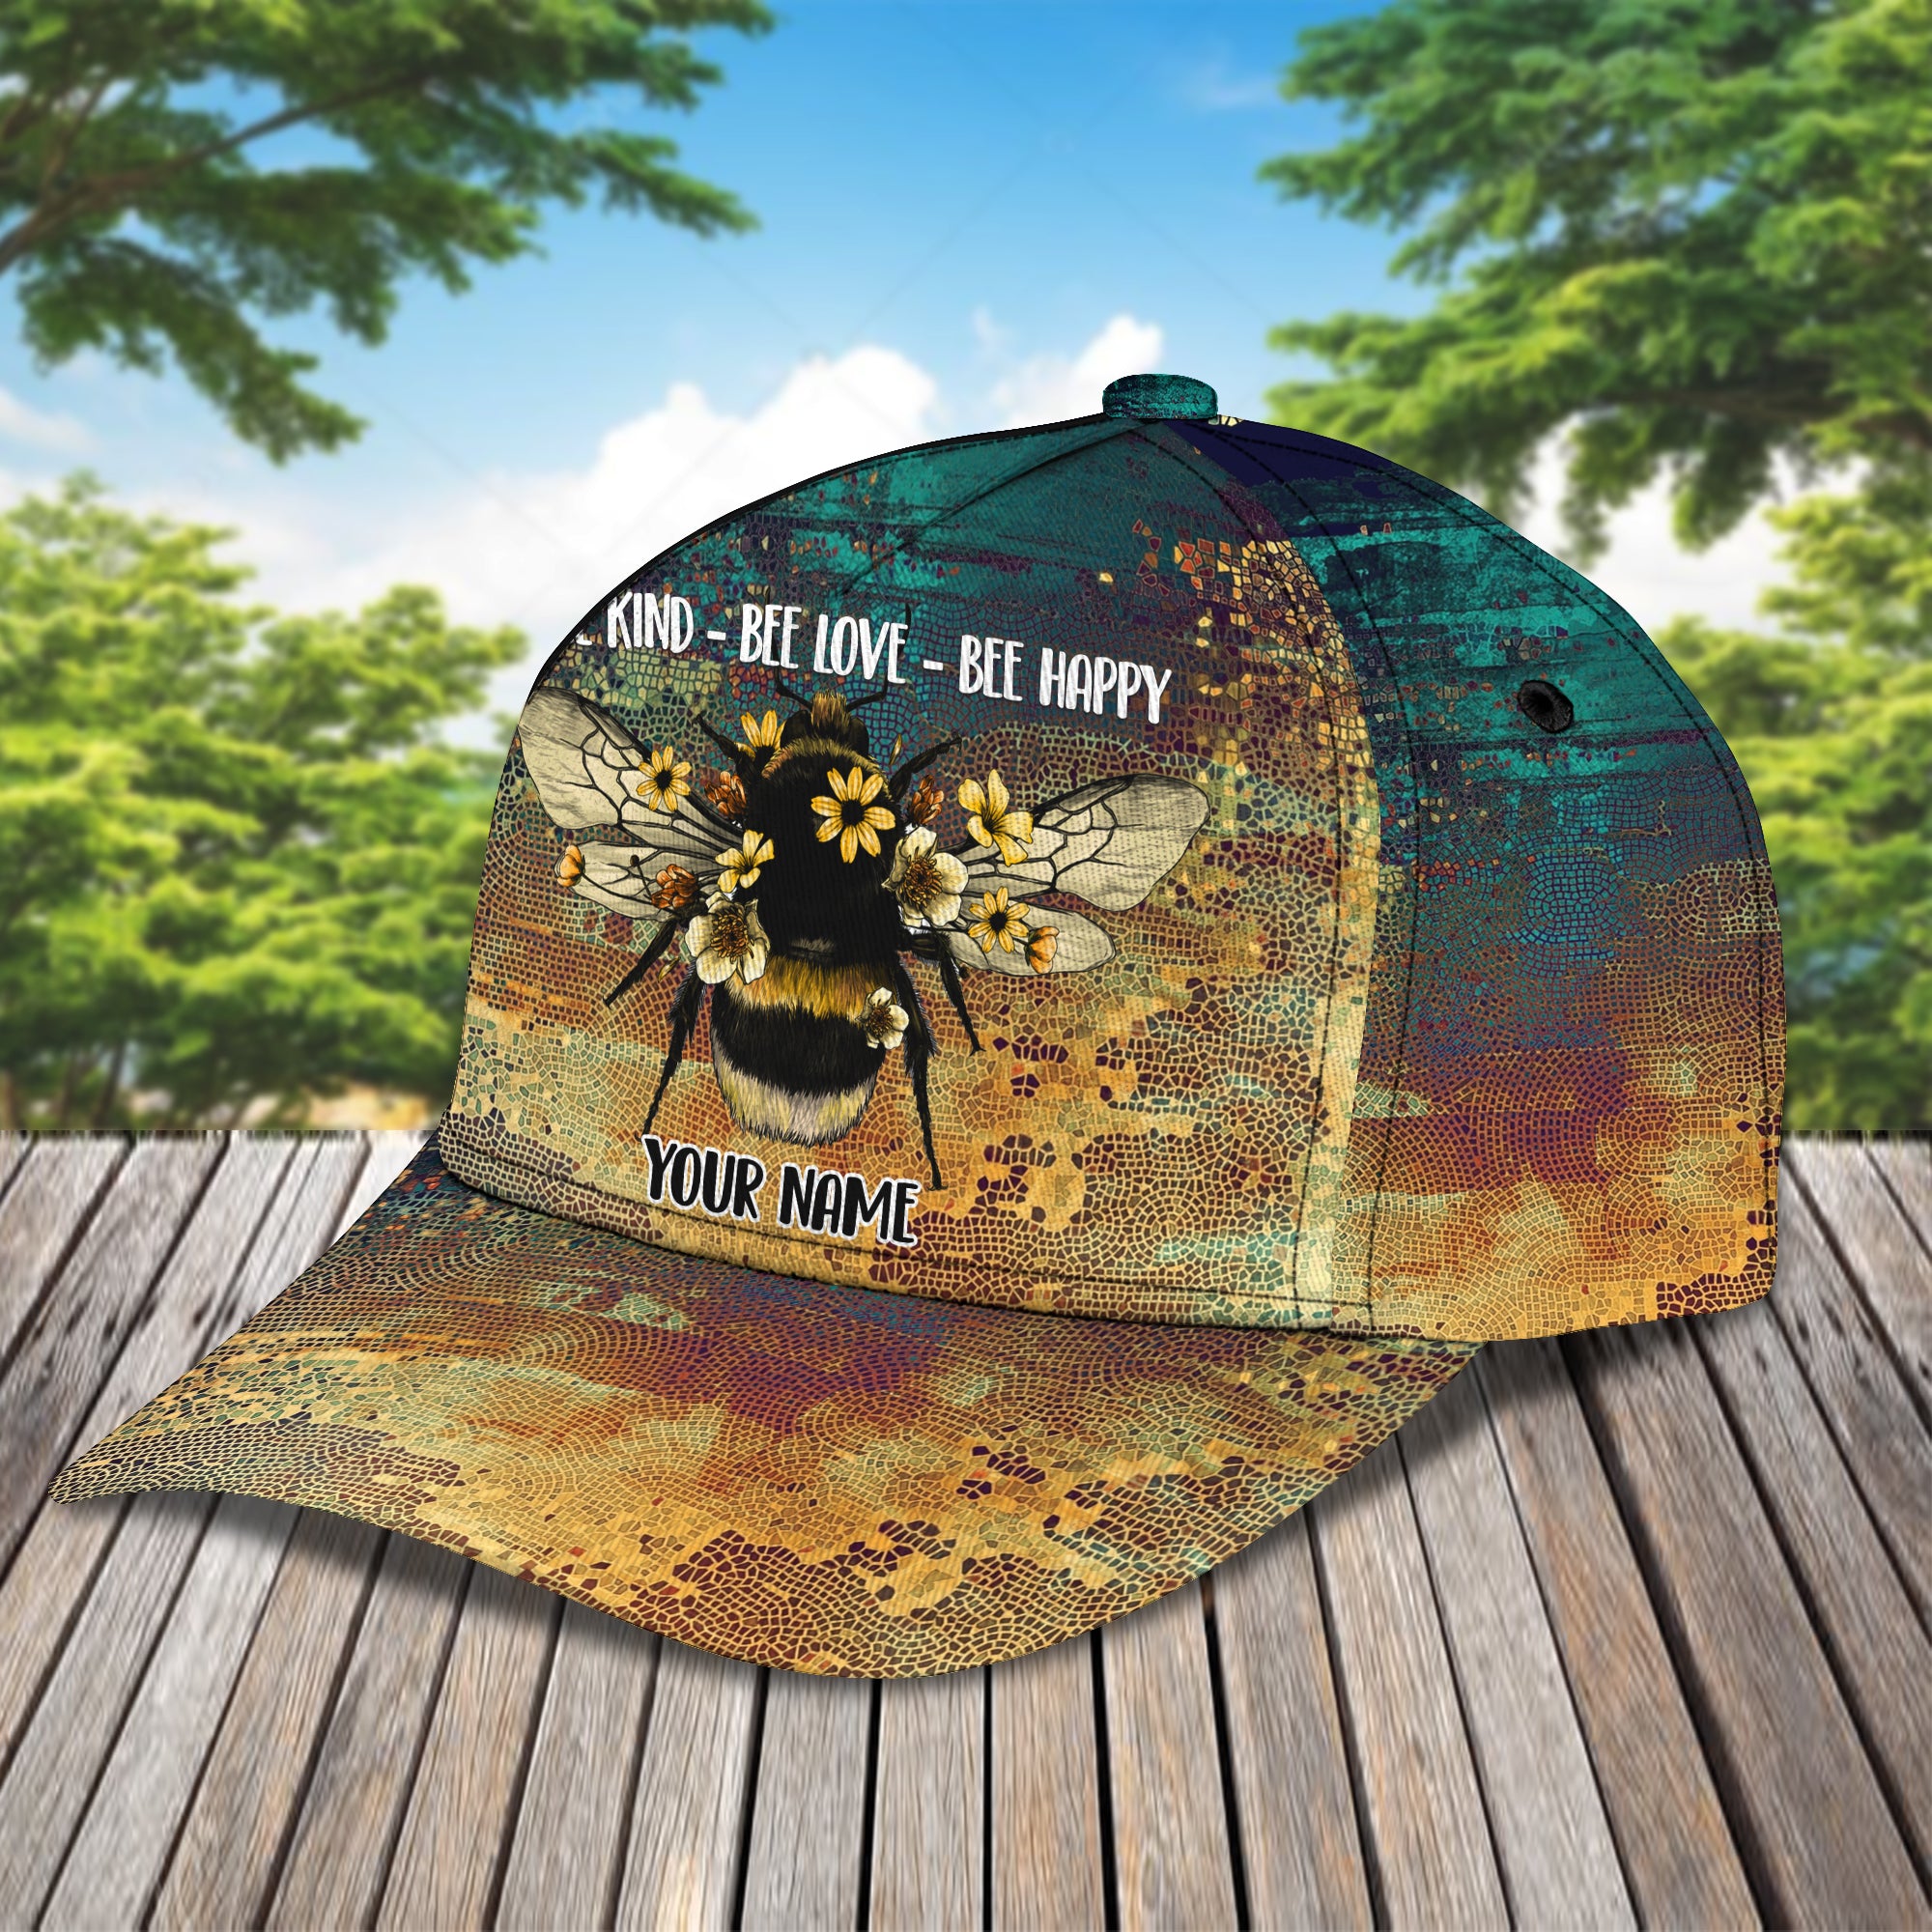 Bee Kind - Bee Love - Bee Happy - Personalized Name Cap - Loop - Nt168 - Ct115